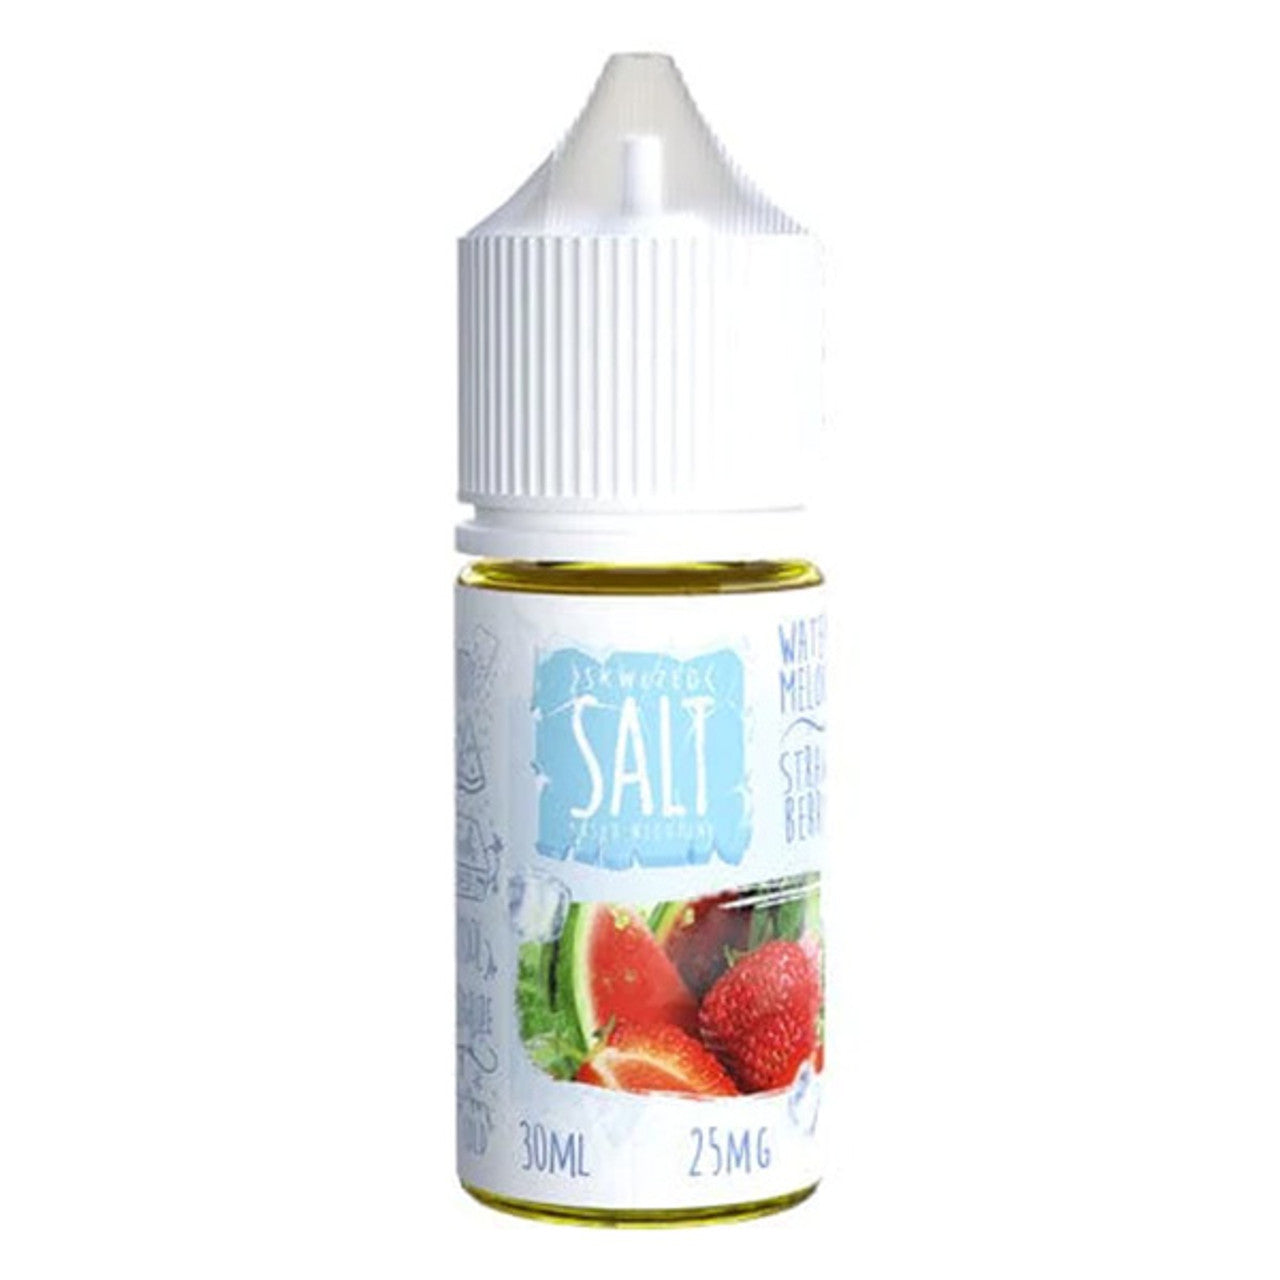 Skwezed Salt Series E-Liquid 30mL (Salt Nic) Watermelon Strawberry Ice with Packaging